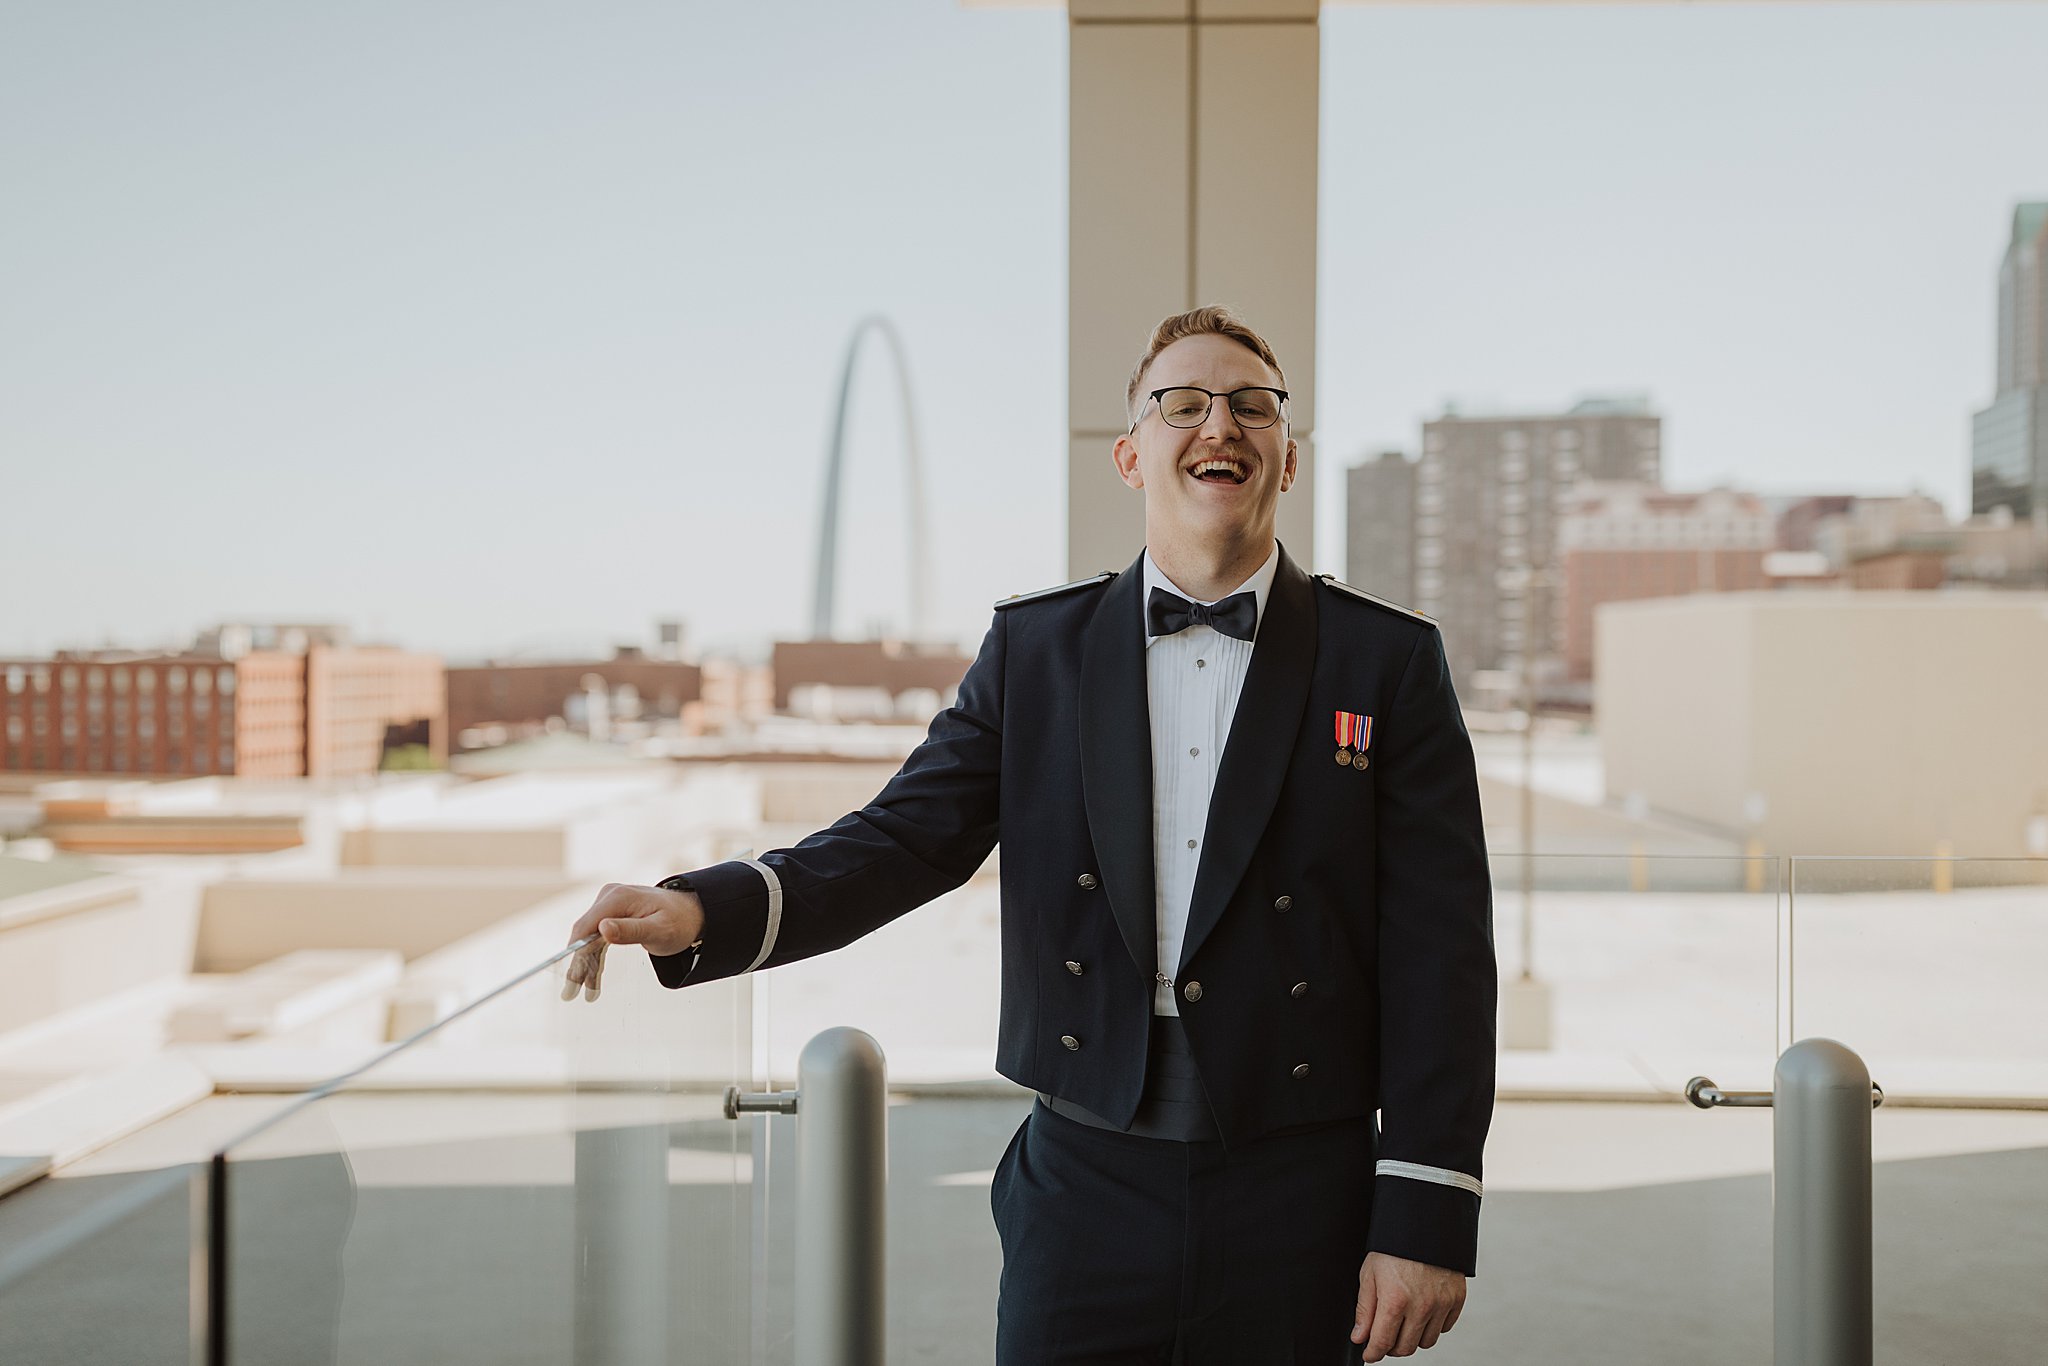 Intimate Wedding at Four Seasons STL | St. Louis Wedding Photographer